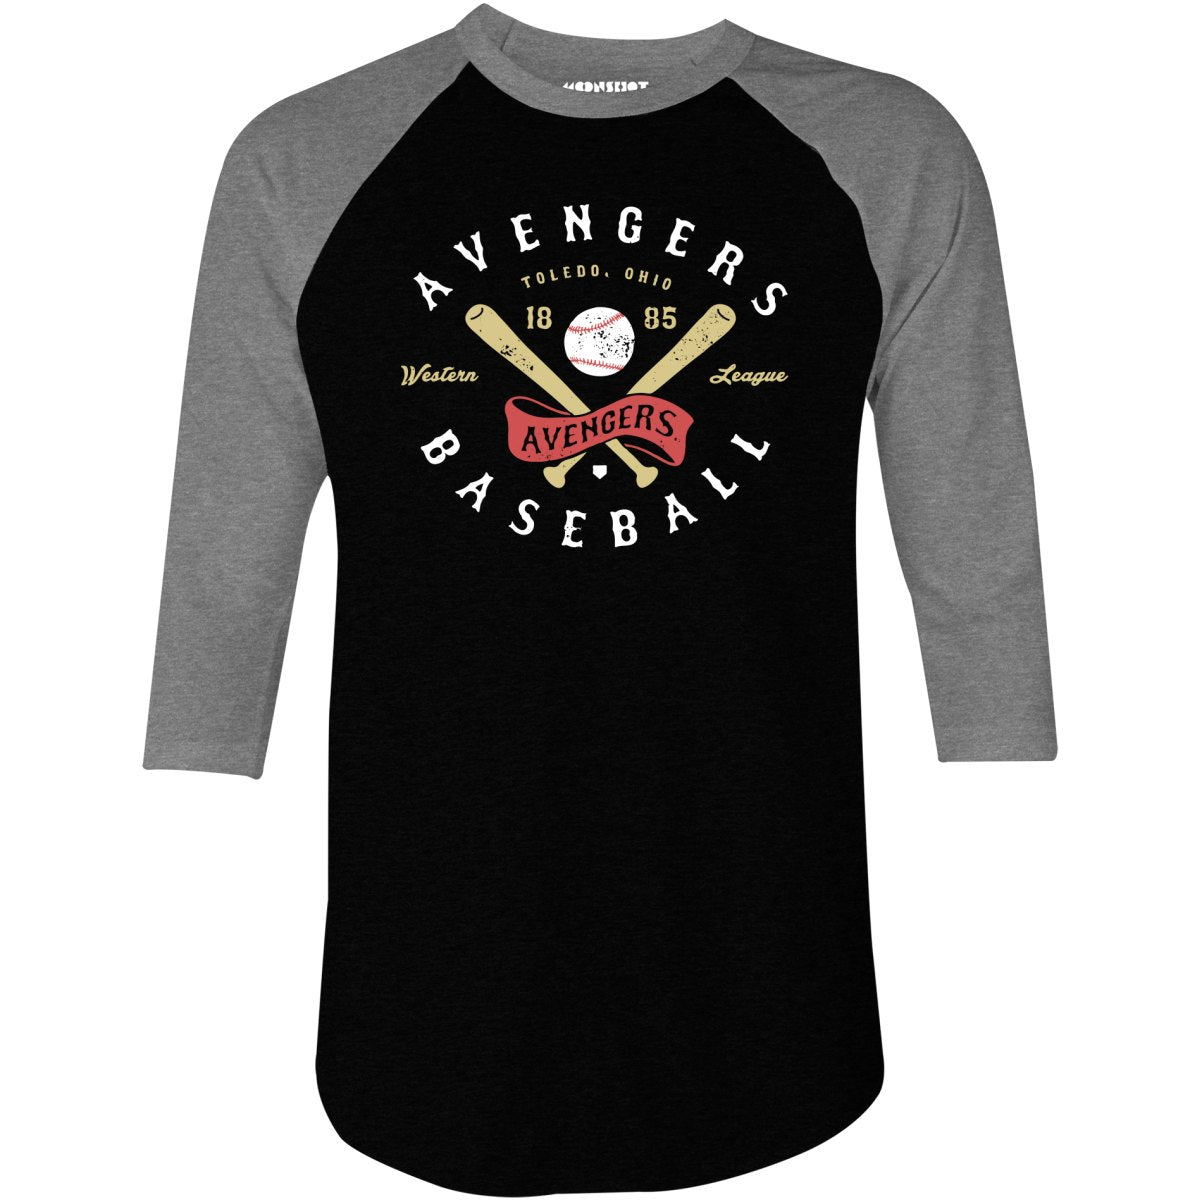 Toledo Avengers - Ohio - Vintage Defunct Baseball Teams - 3/4 Sleeve Raglan T-Shirt